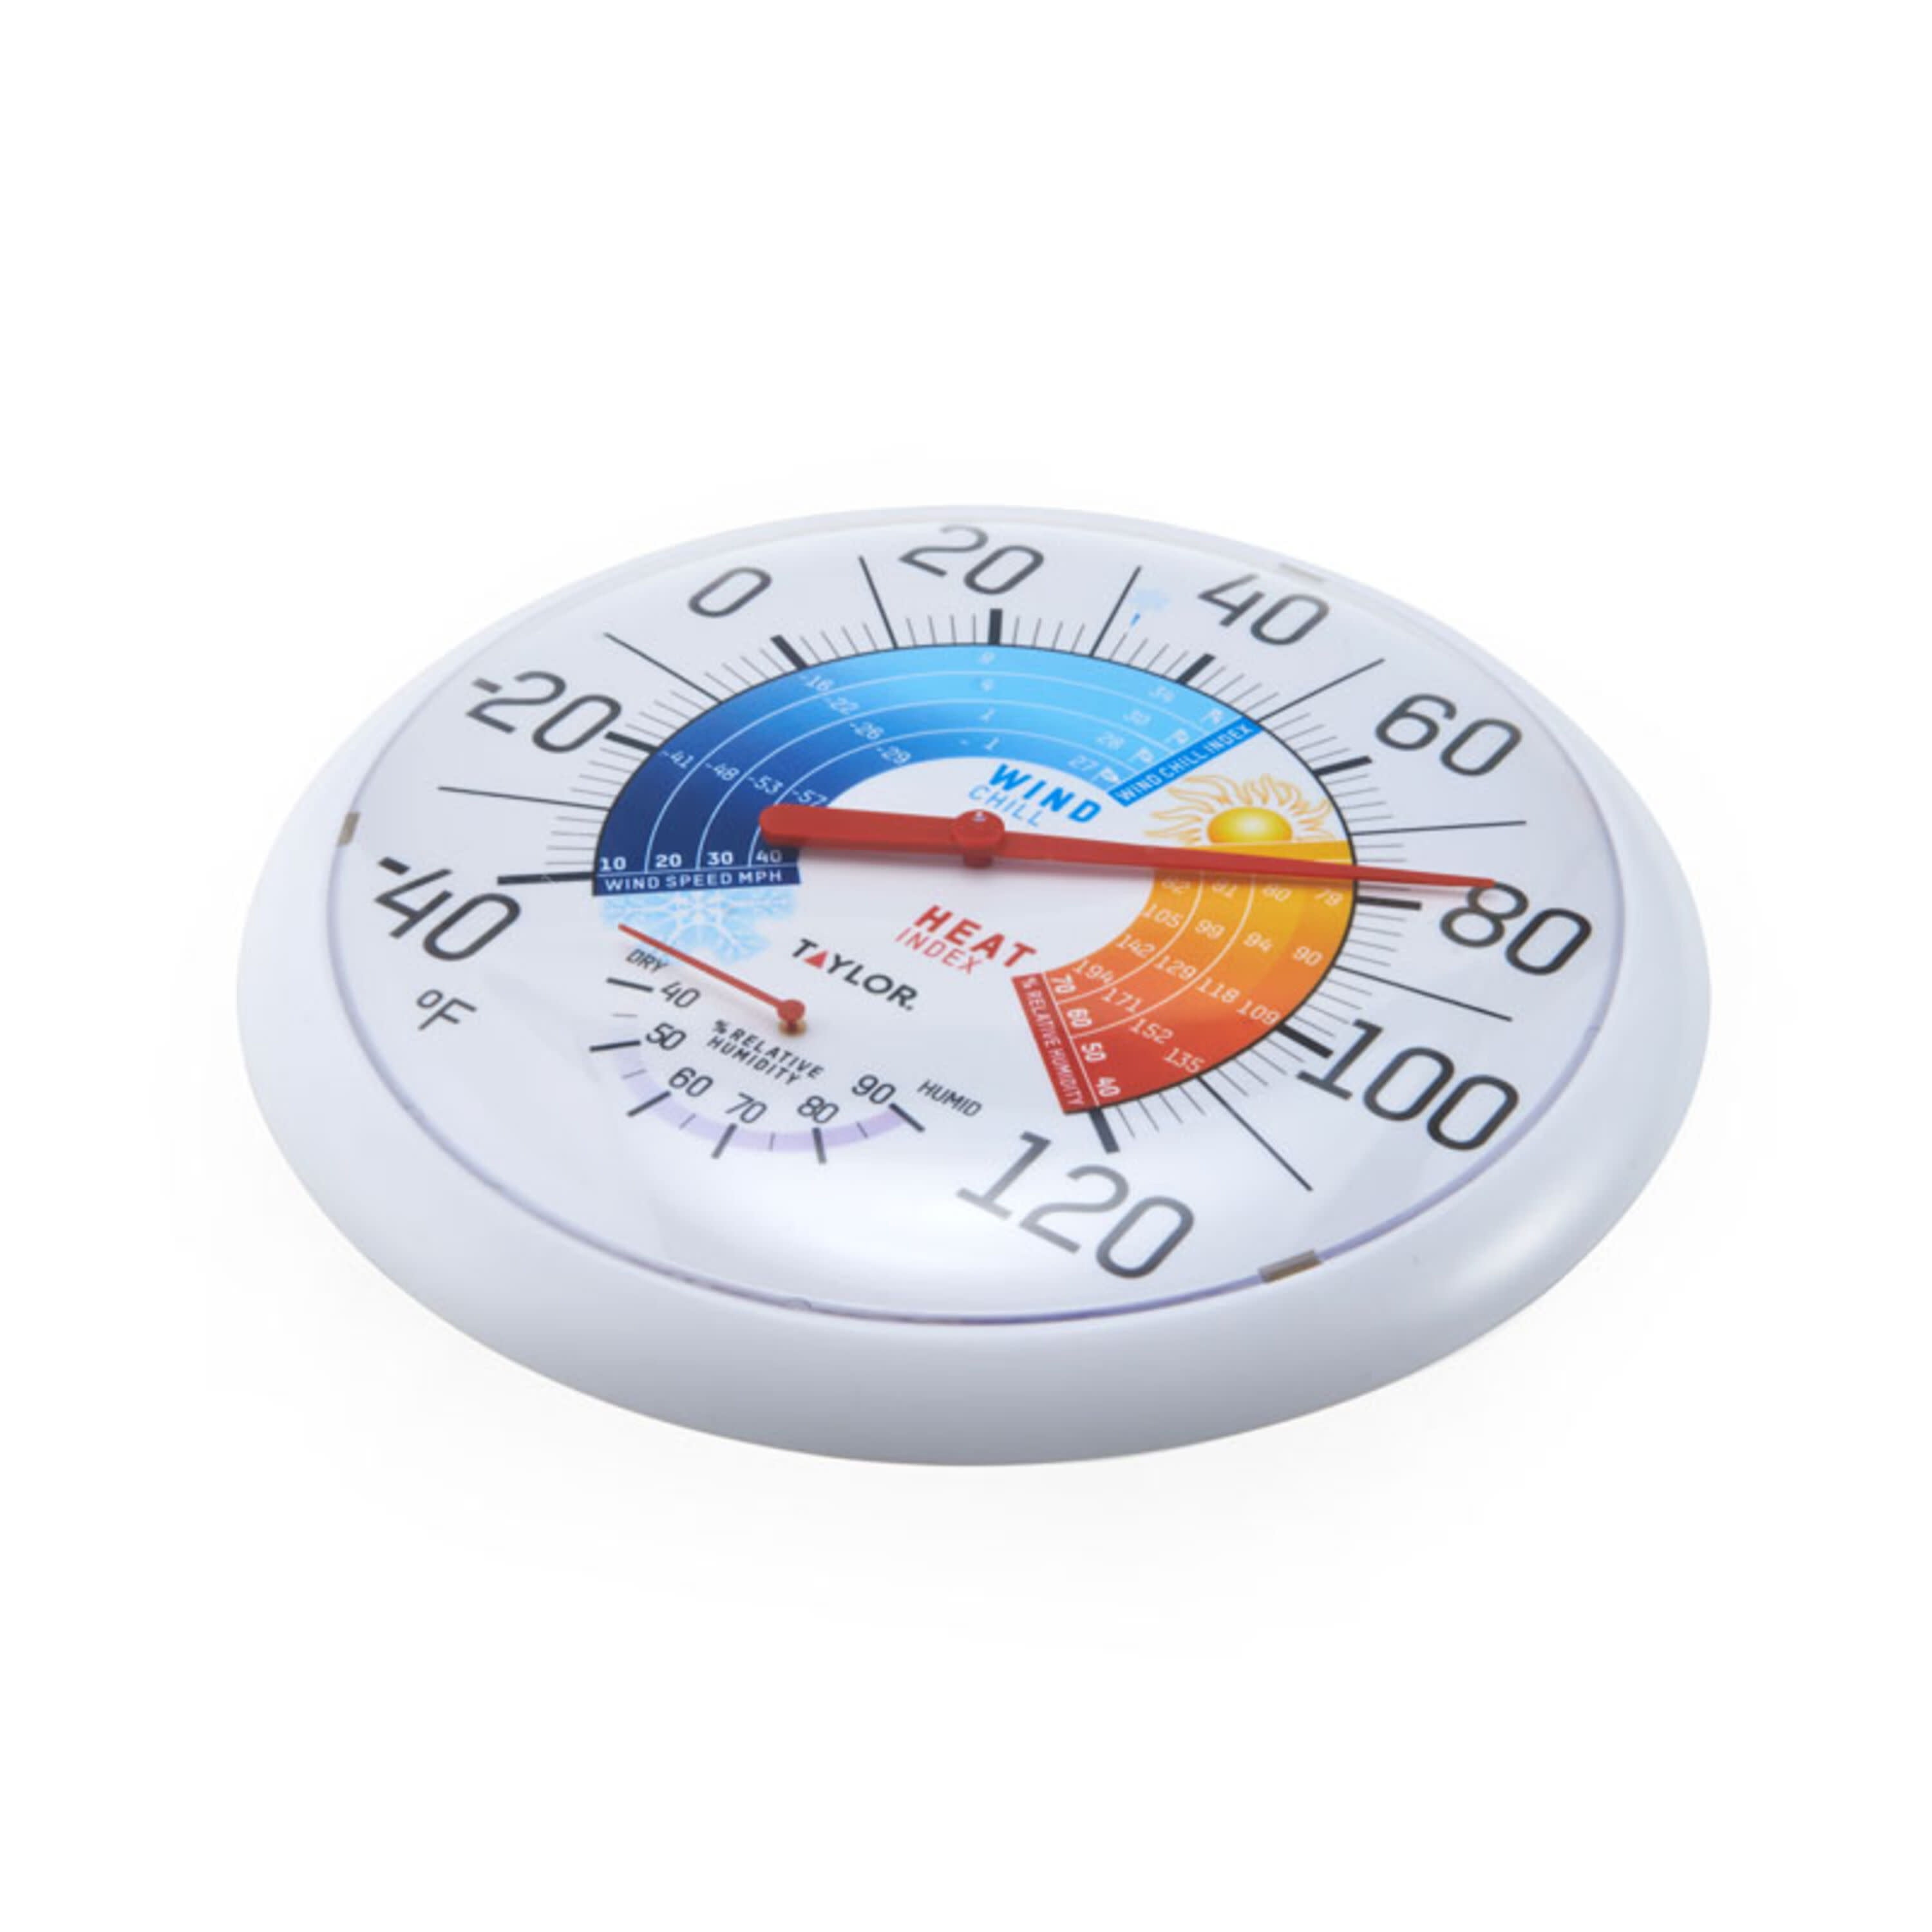 12 Metal Patio Thermometer & Hygrometer – Taylor USA